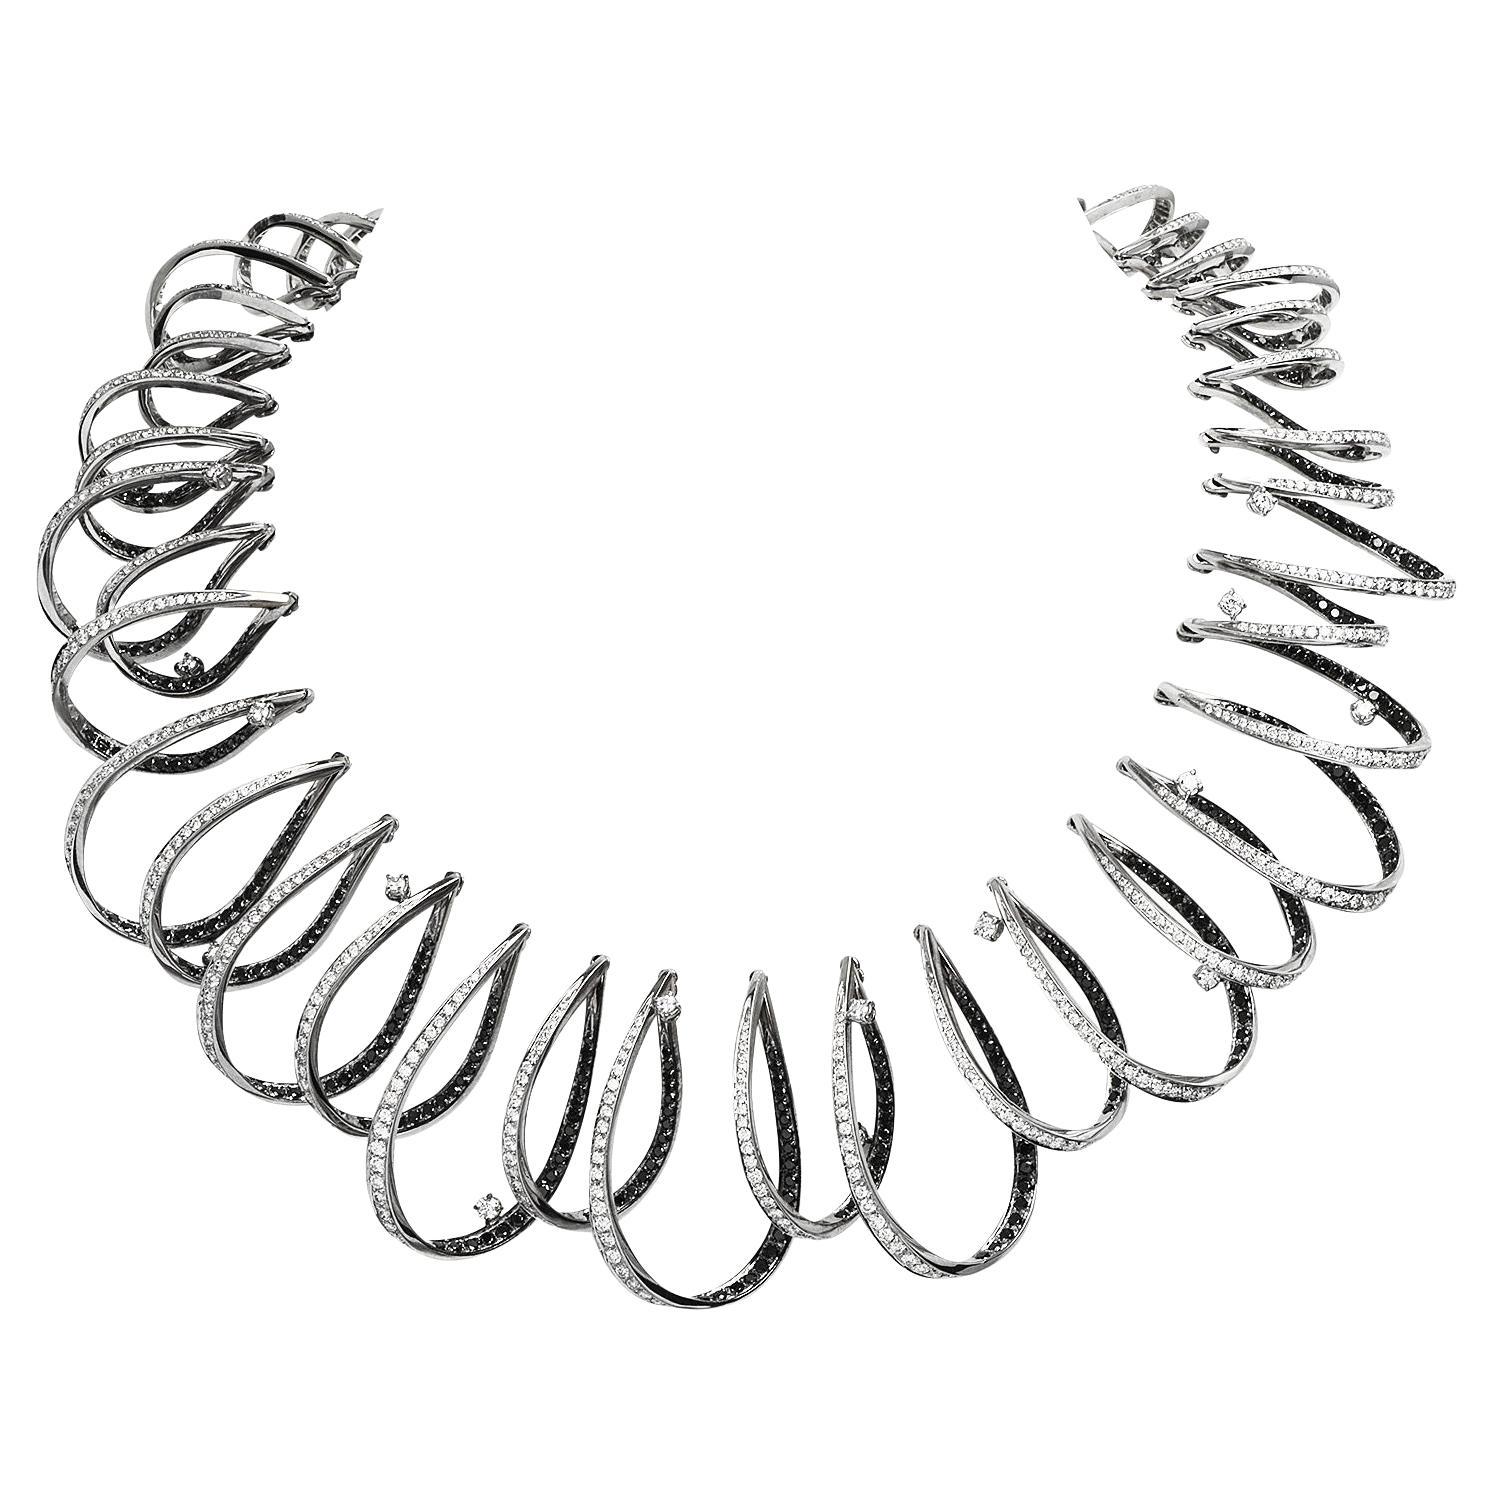 Stefan Hefner Diamond 18K White Gold Spring Link Collar Necklace